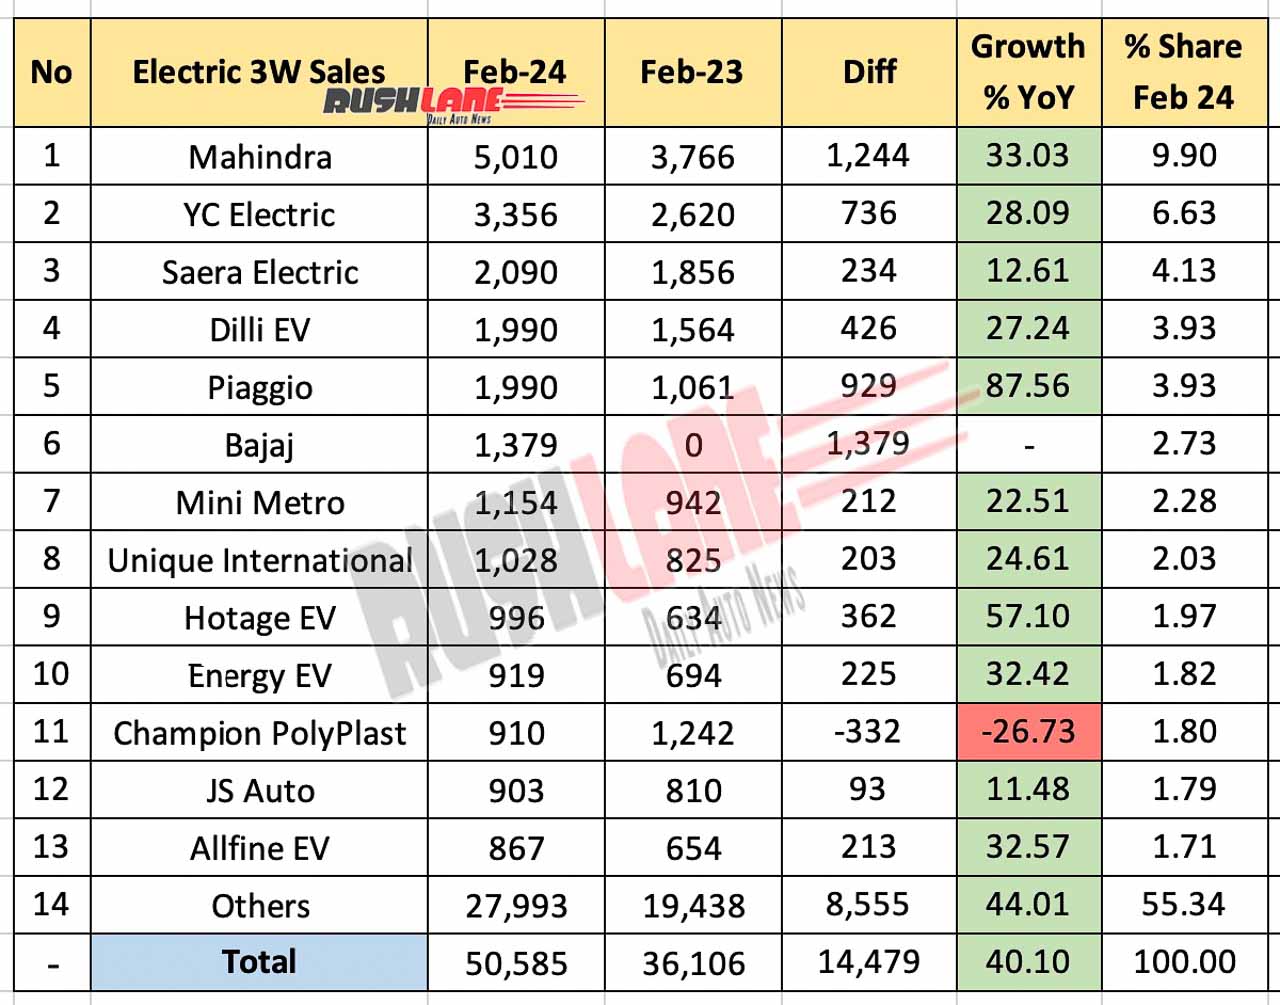 Electric 3W / Rickshaw Sales Feb 2024 vs Feb 2023 - YoY Comparison